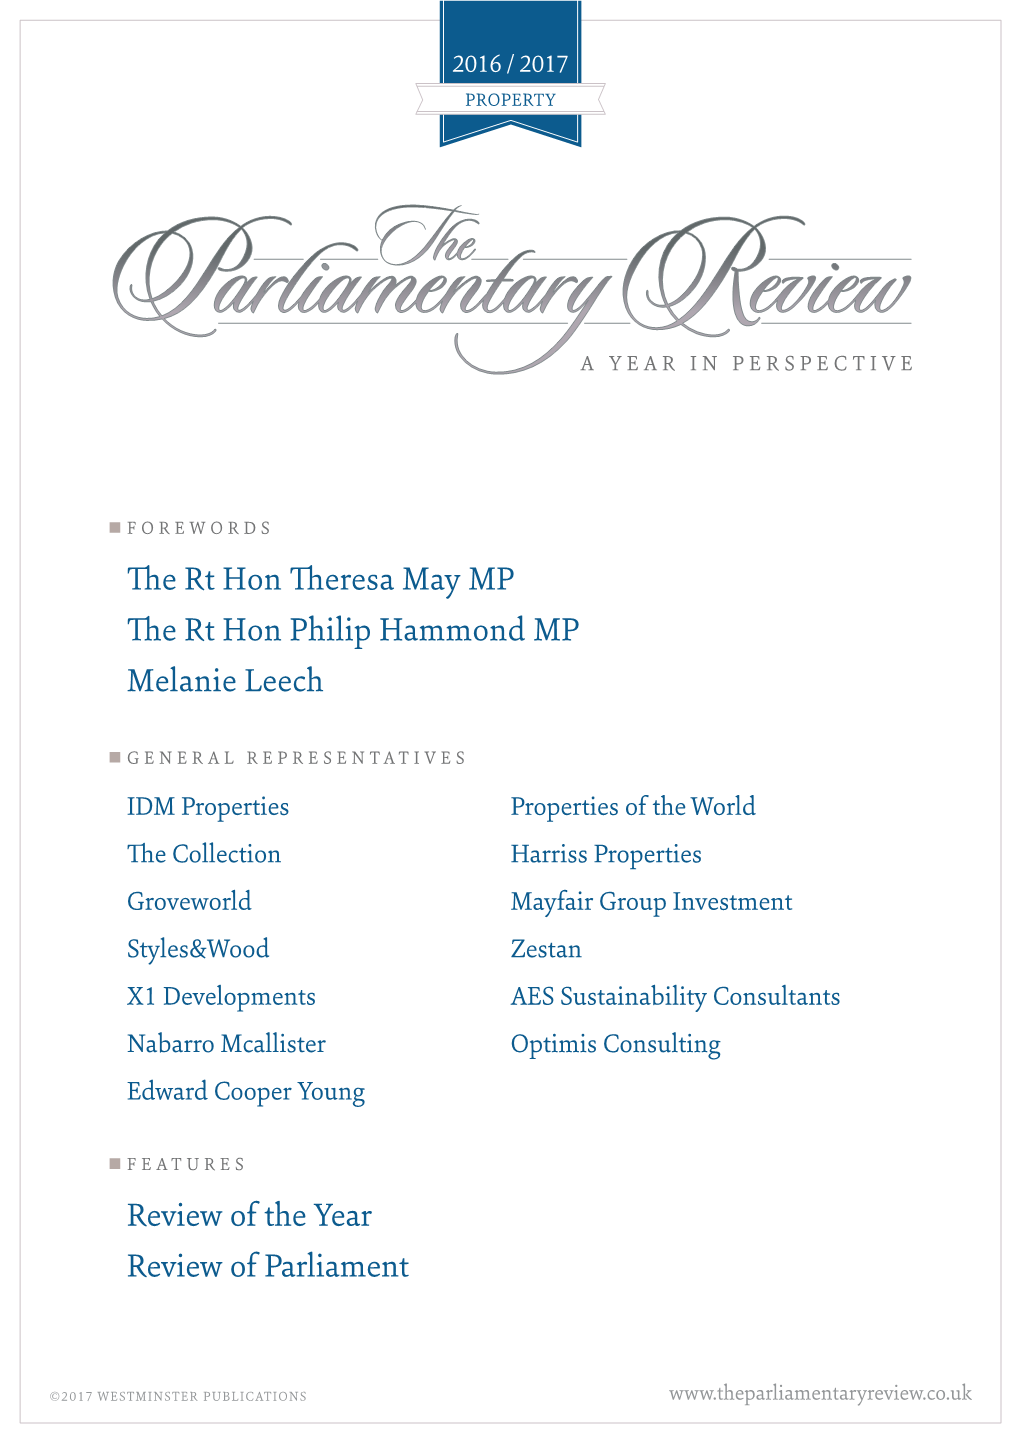 The Rt Hon Theresa May MP the Rt Hon Philip Hammond MP Melanie